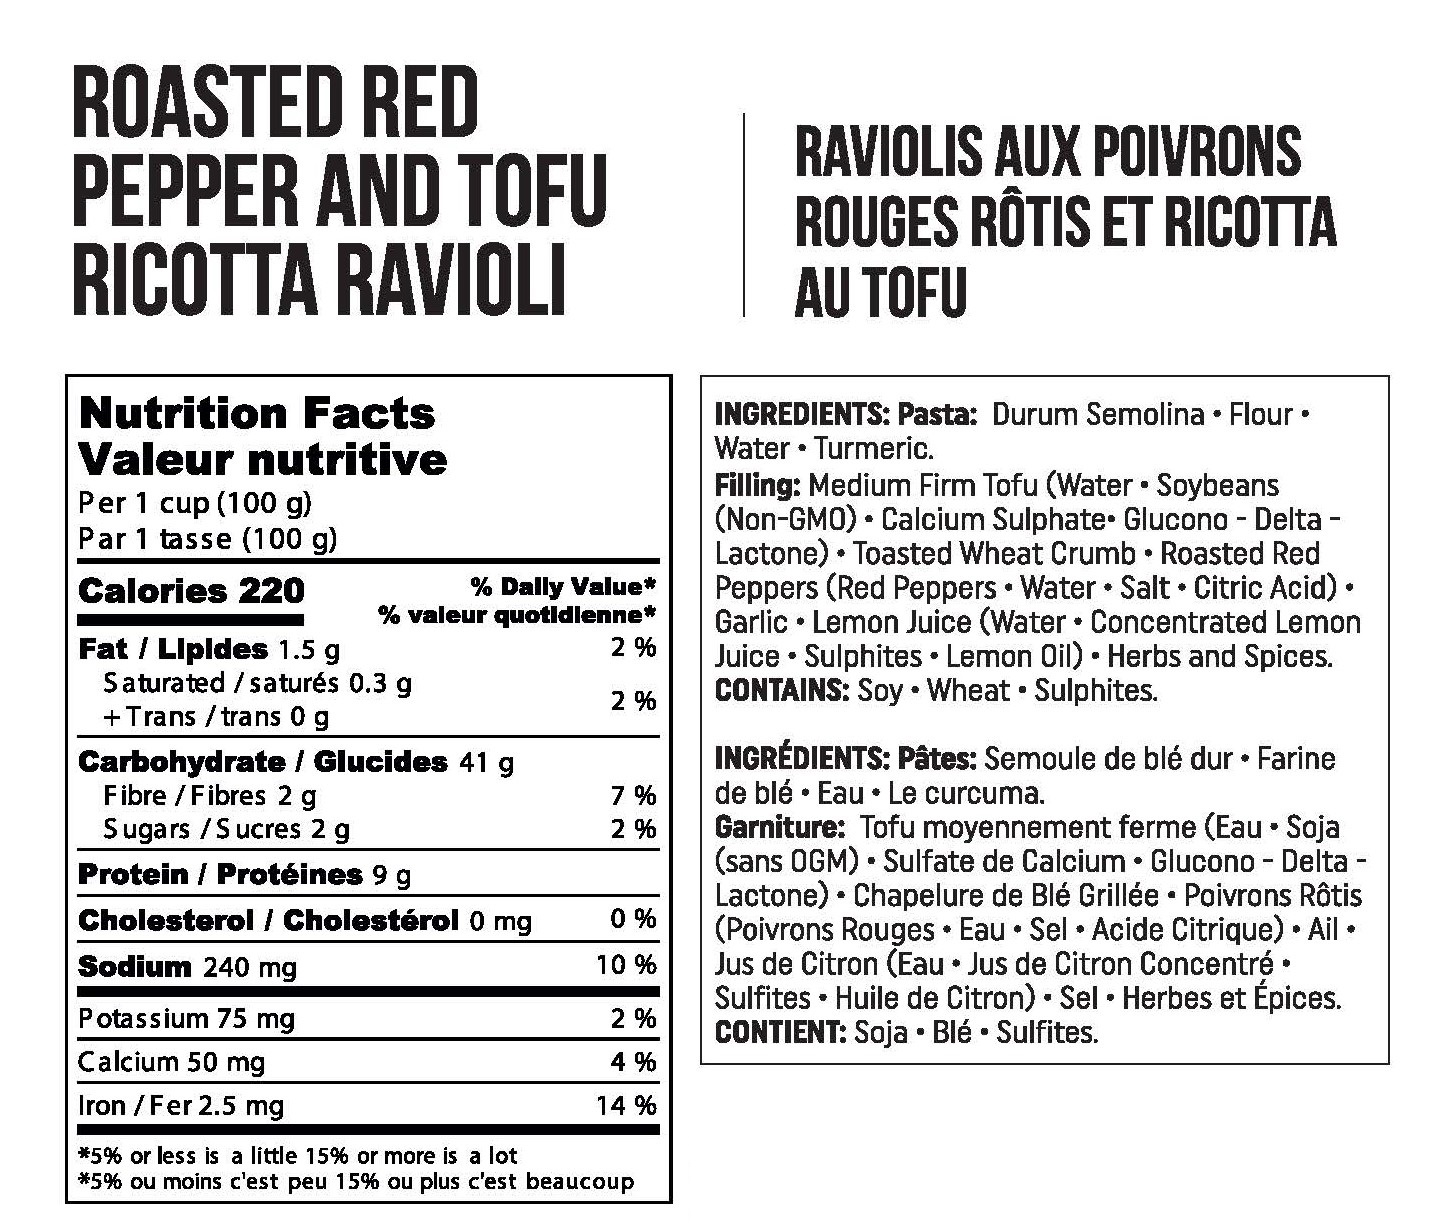 Roasted Red Pepper and Tofu Ricotta Ravioli